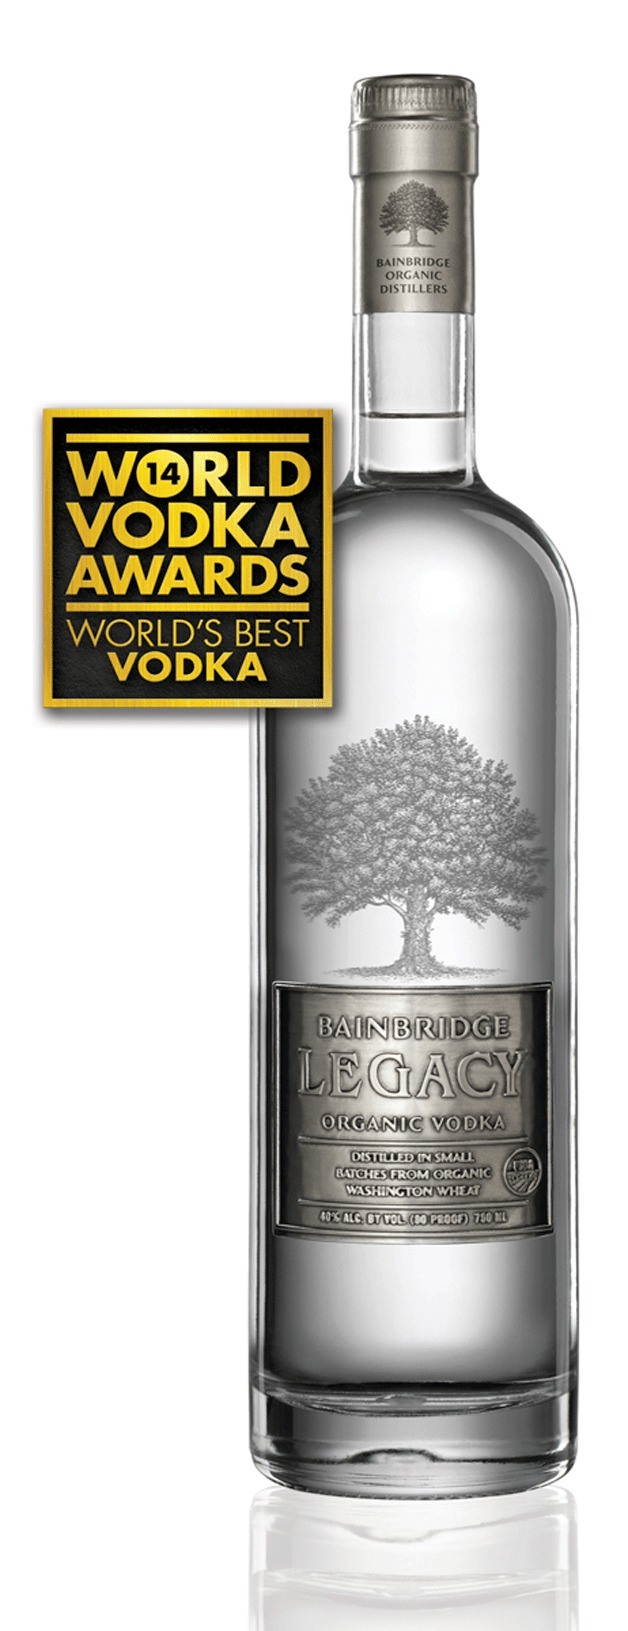 Bainbridge Legacy Organic Vodka was named “World’s Best Vodka” by the World Vodka Awards.